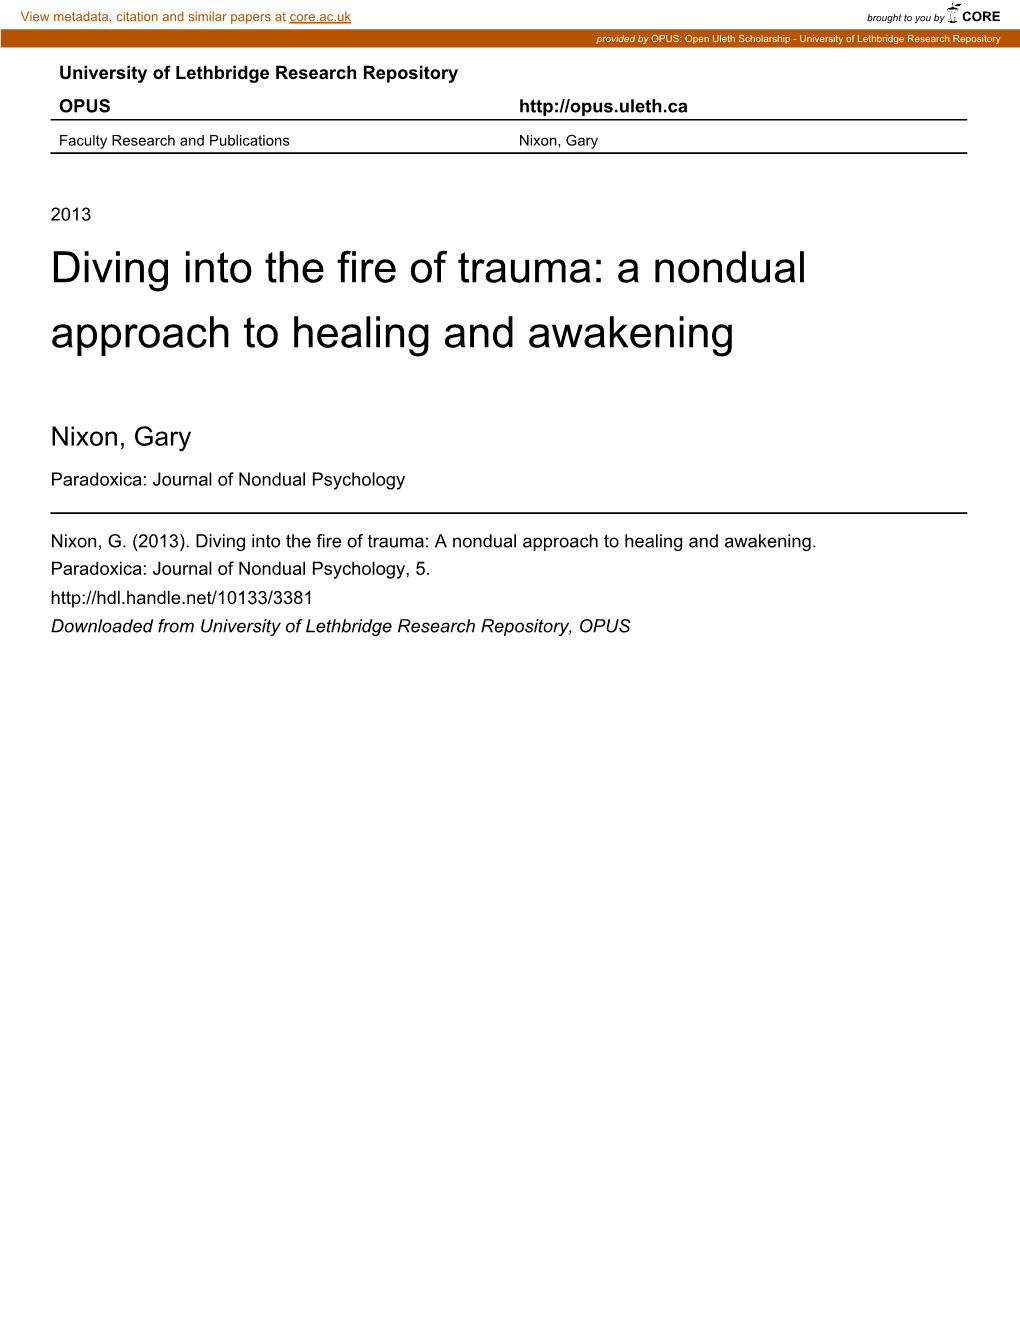 A Nondual Approach to Healing and Awakening